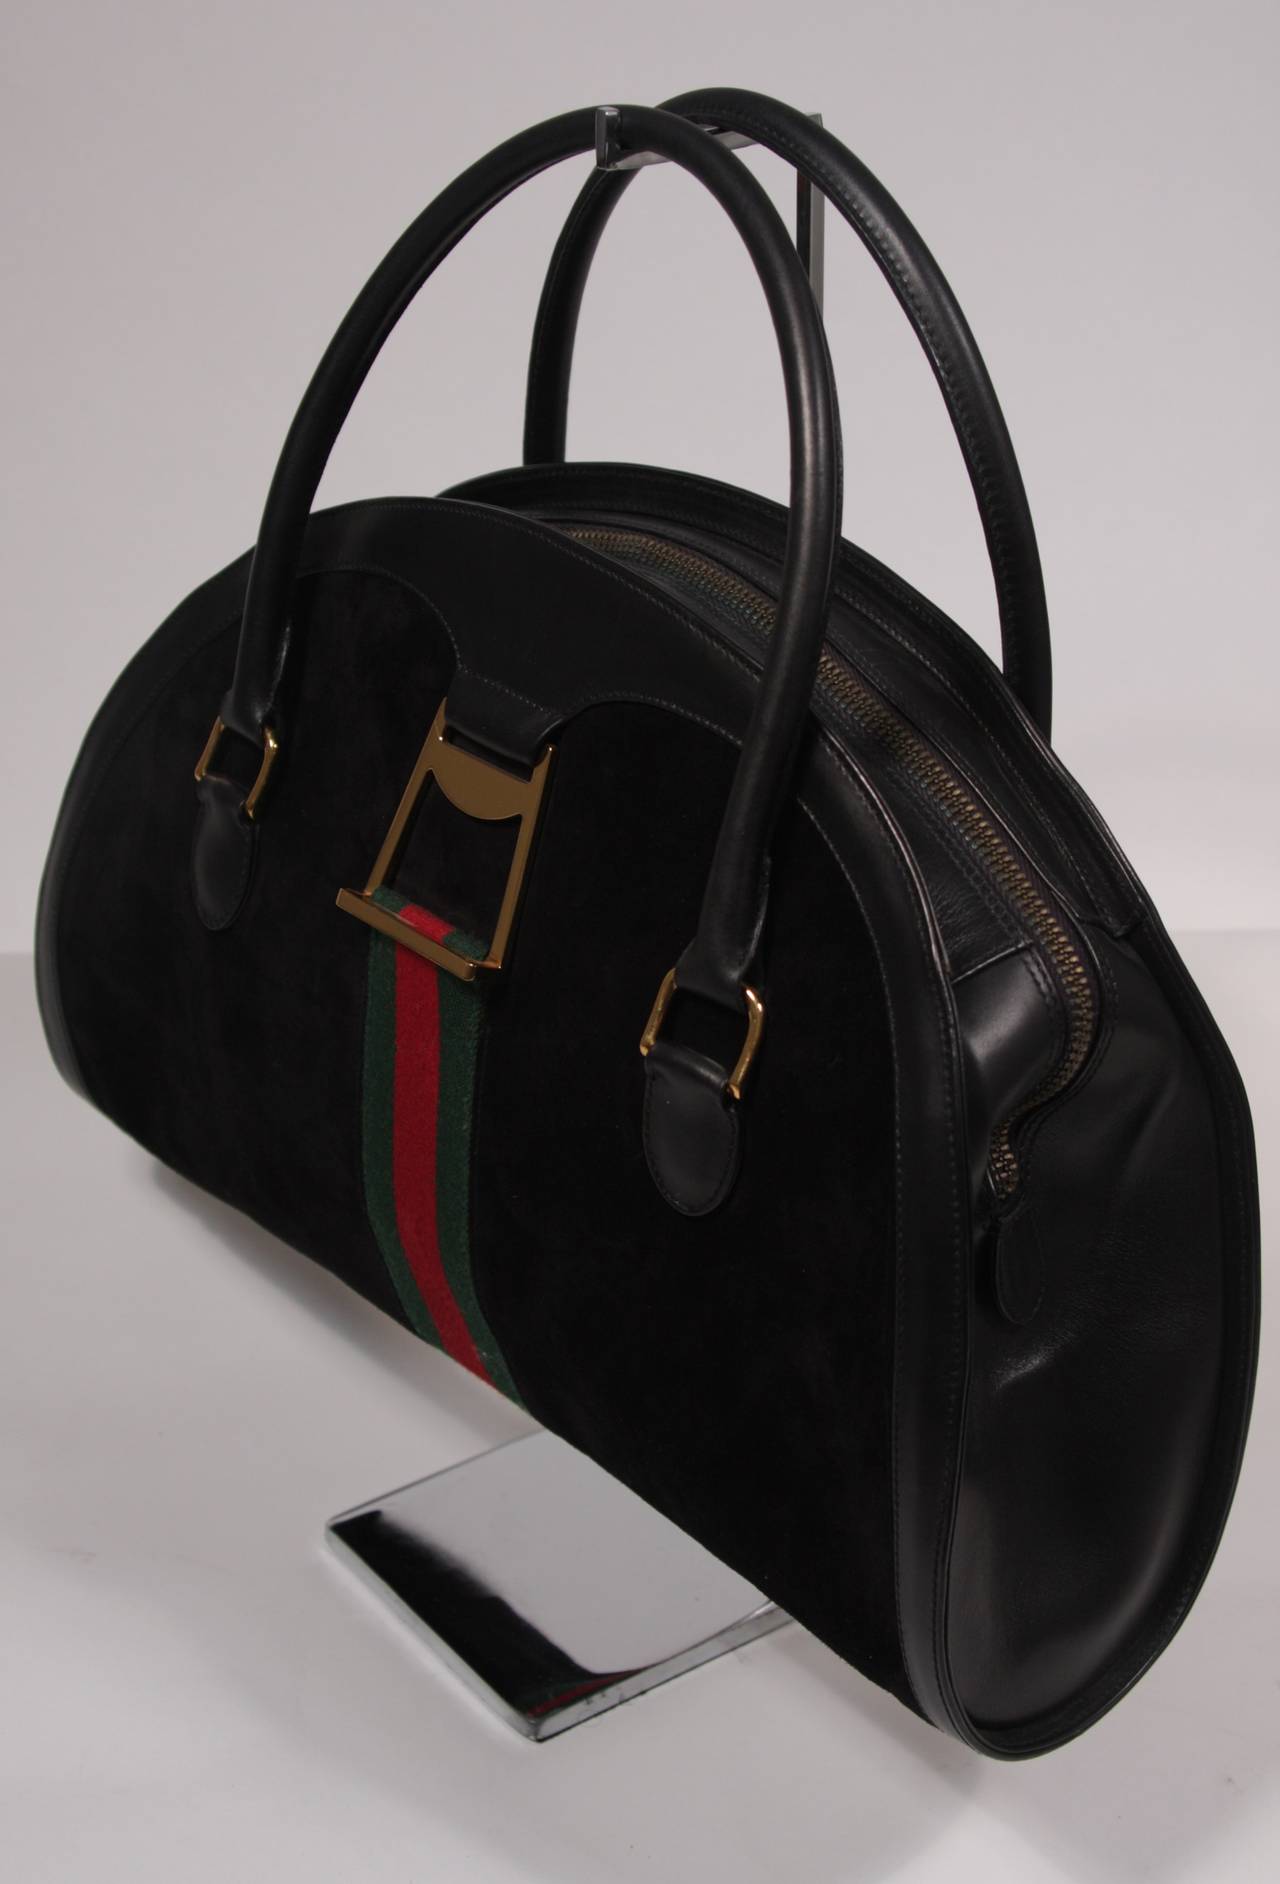 Gucci Black Leather Suede Purse Excellent Condition 1